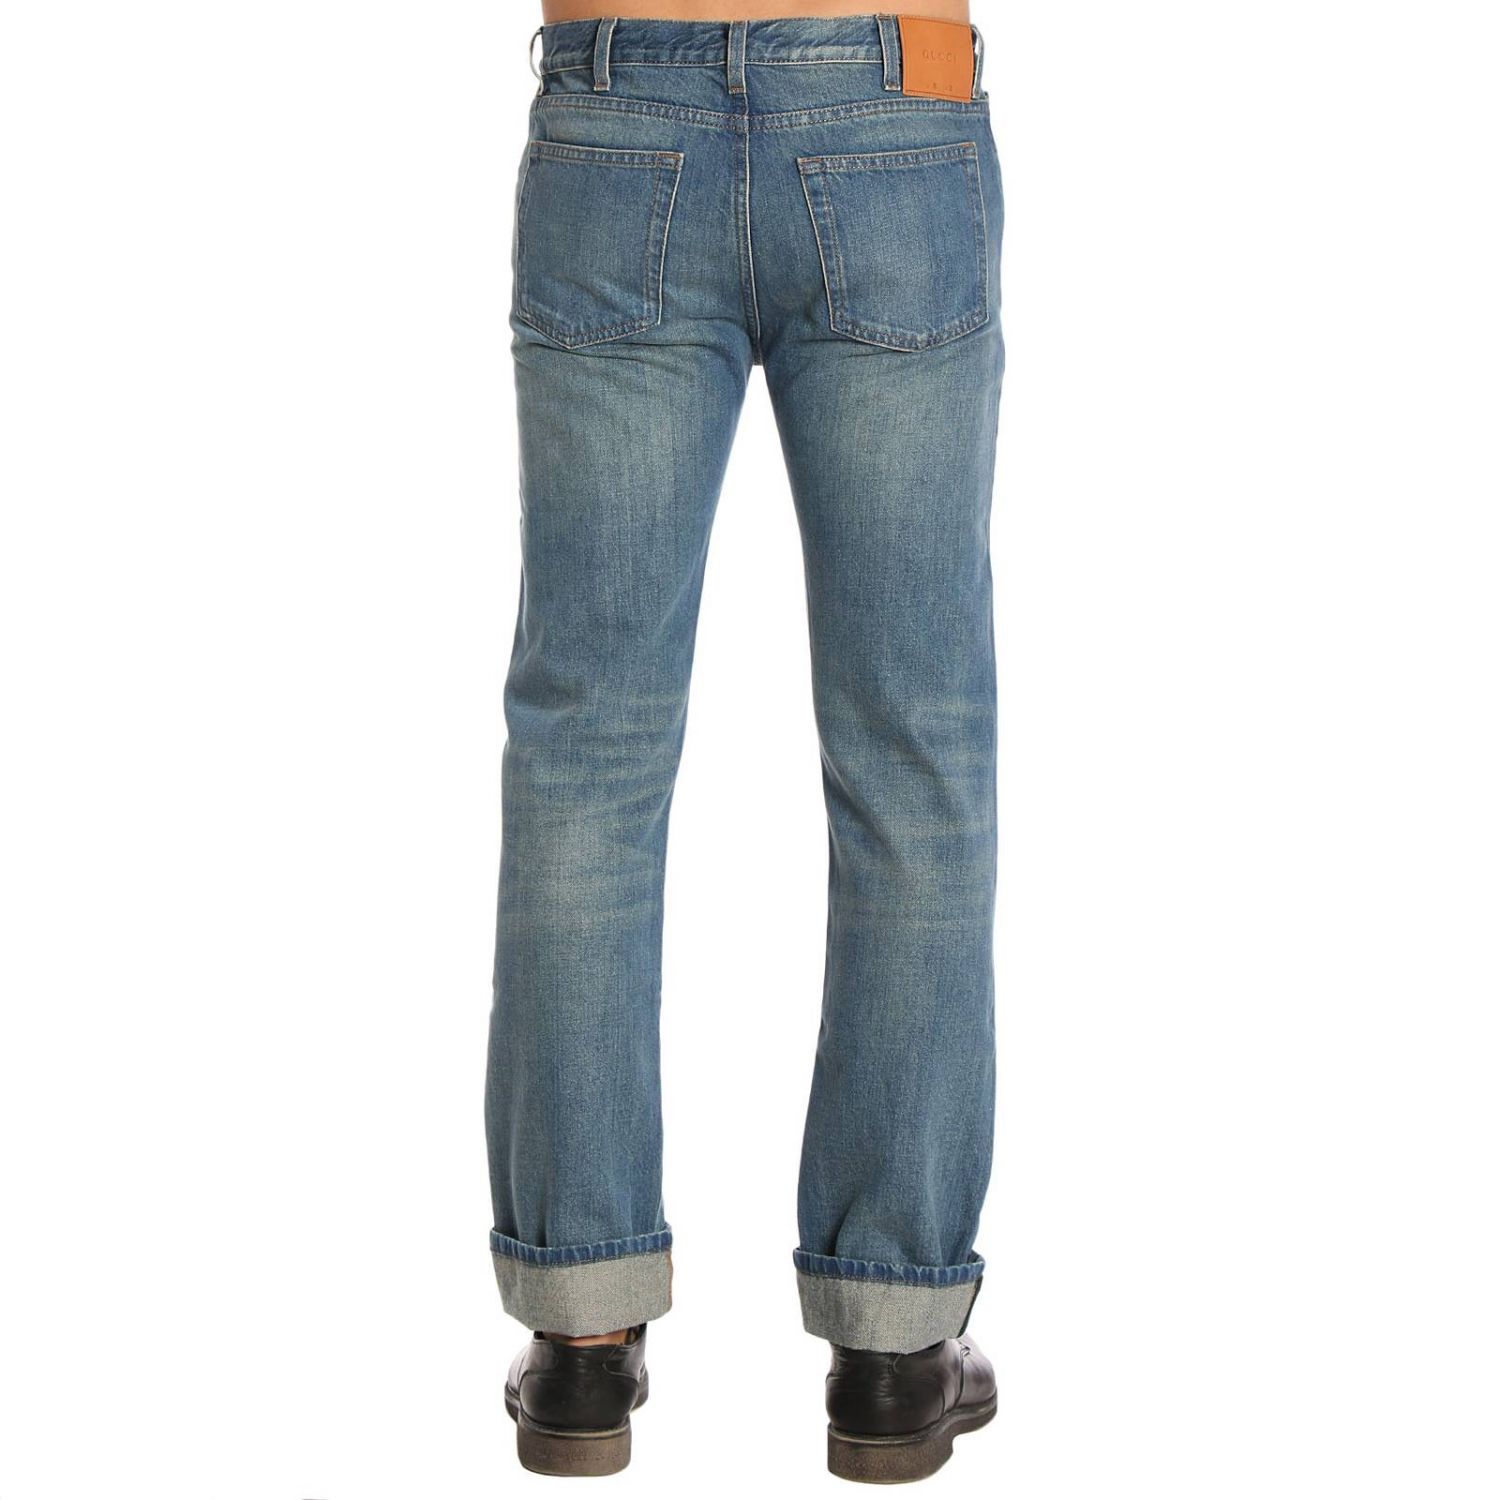 Gucci Outlet: Jeans men - Denim | Jeans Gucci 430367 XR191 GIGLIO.COM